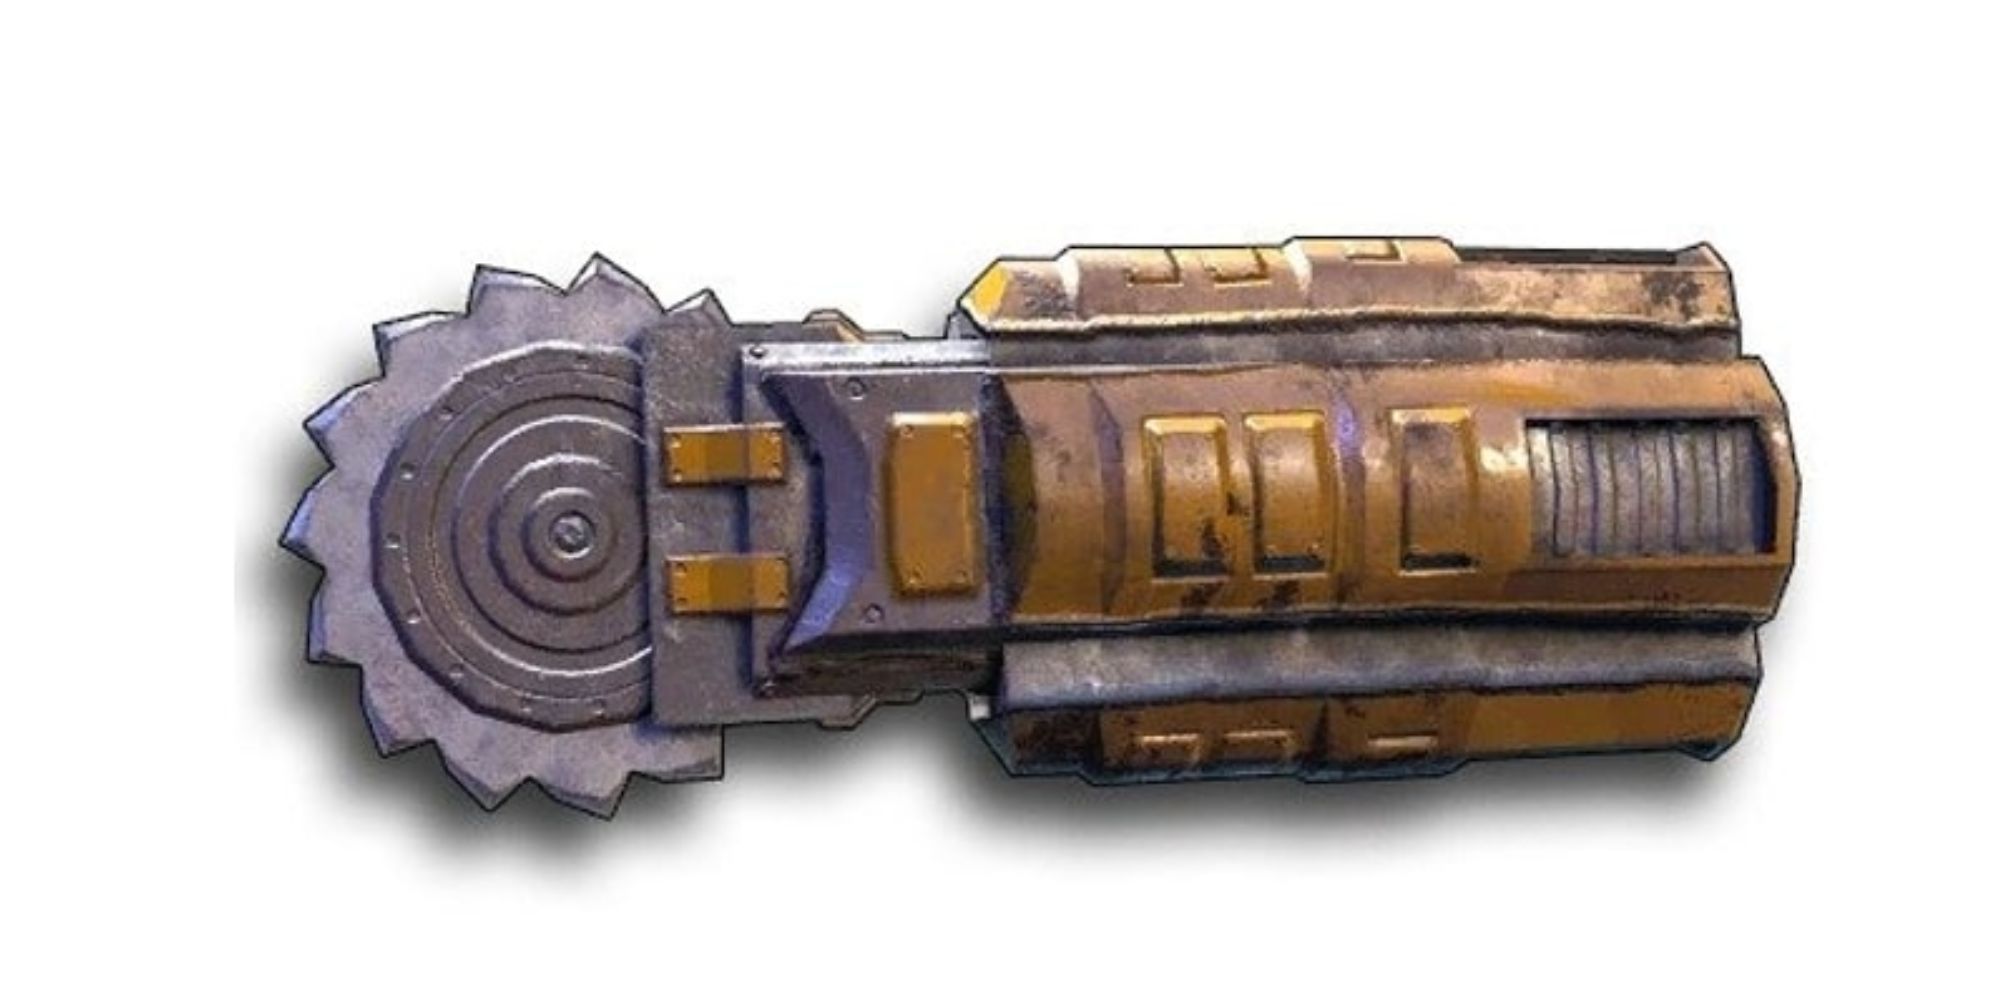 Close-up of Sawblade Cestus weapon from Wasteland 3